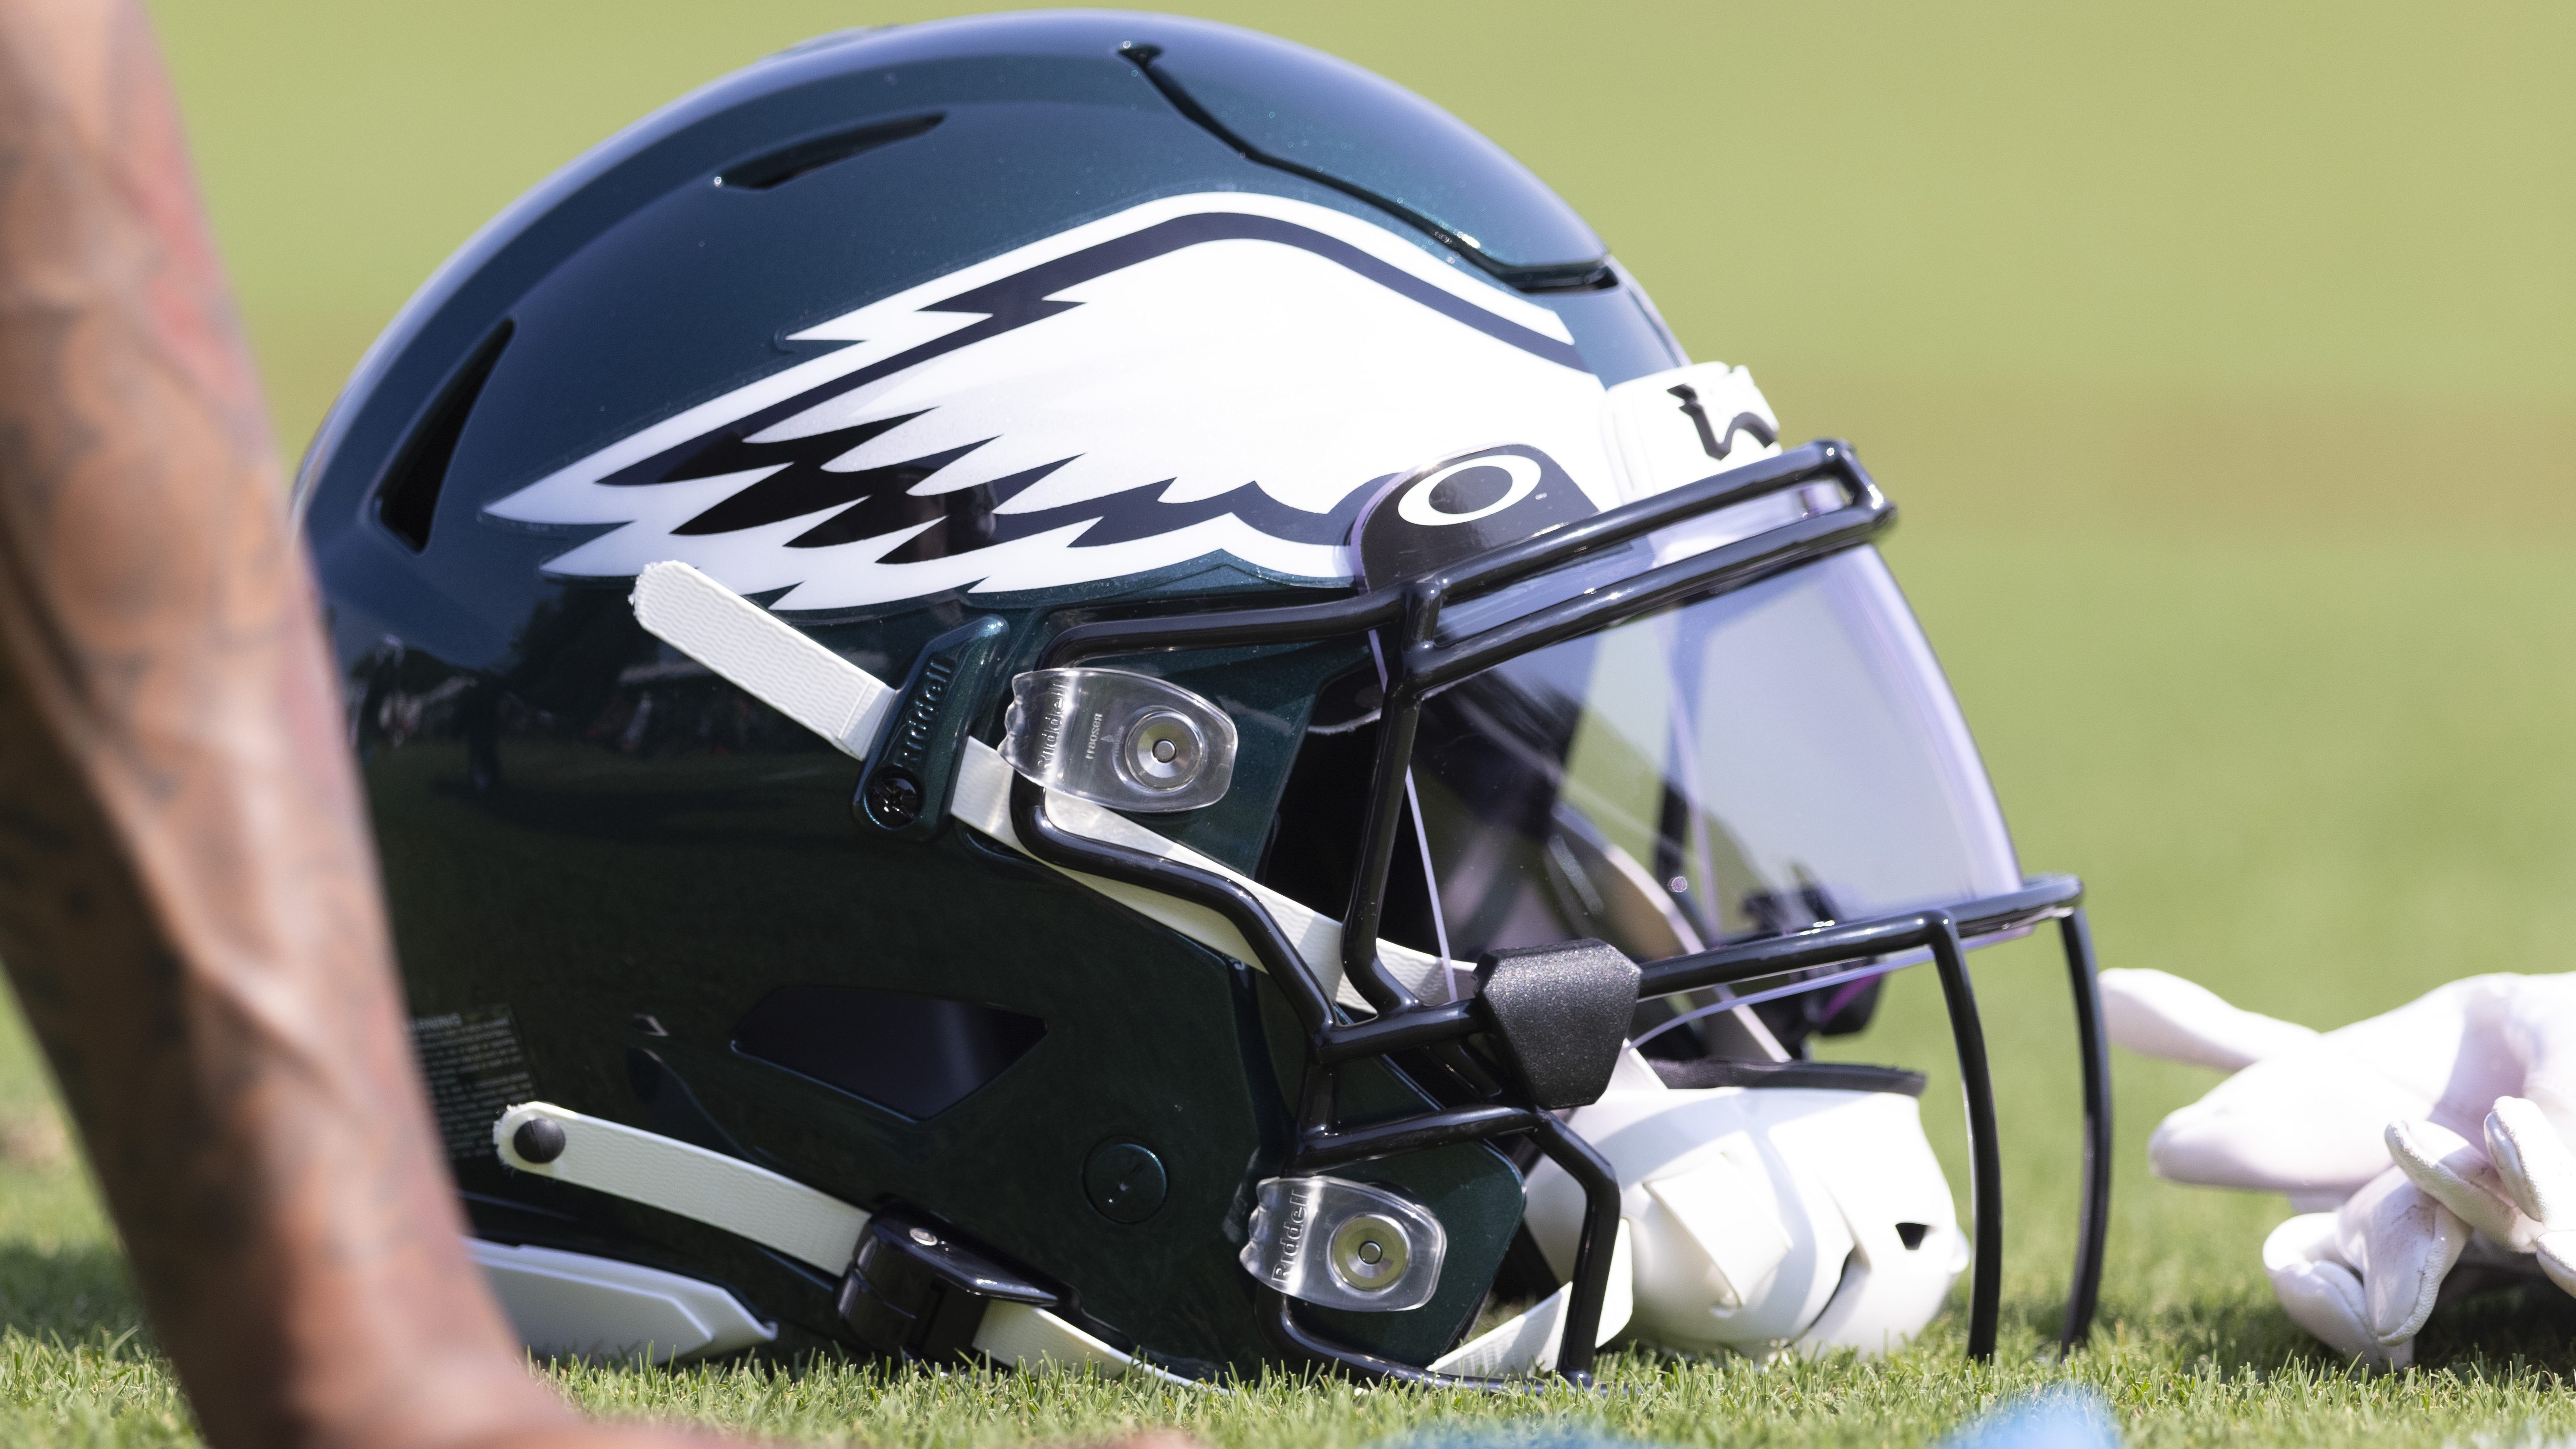 Eagles unveil alternate black helmet for 2022 season